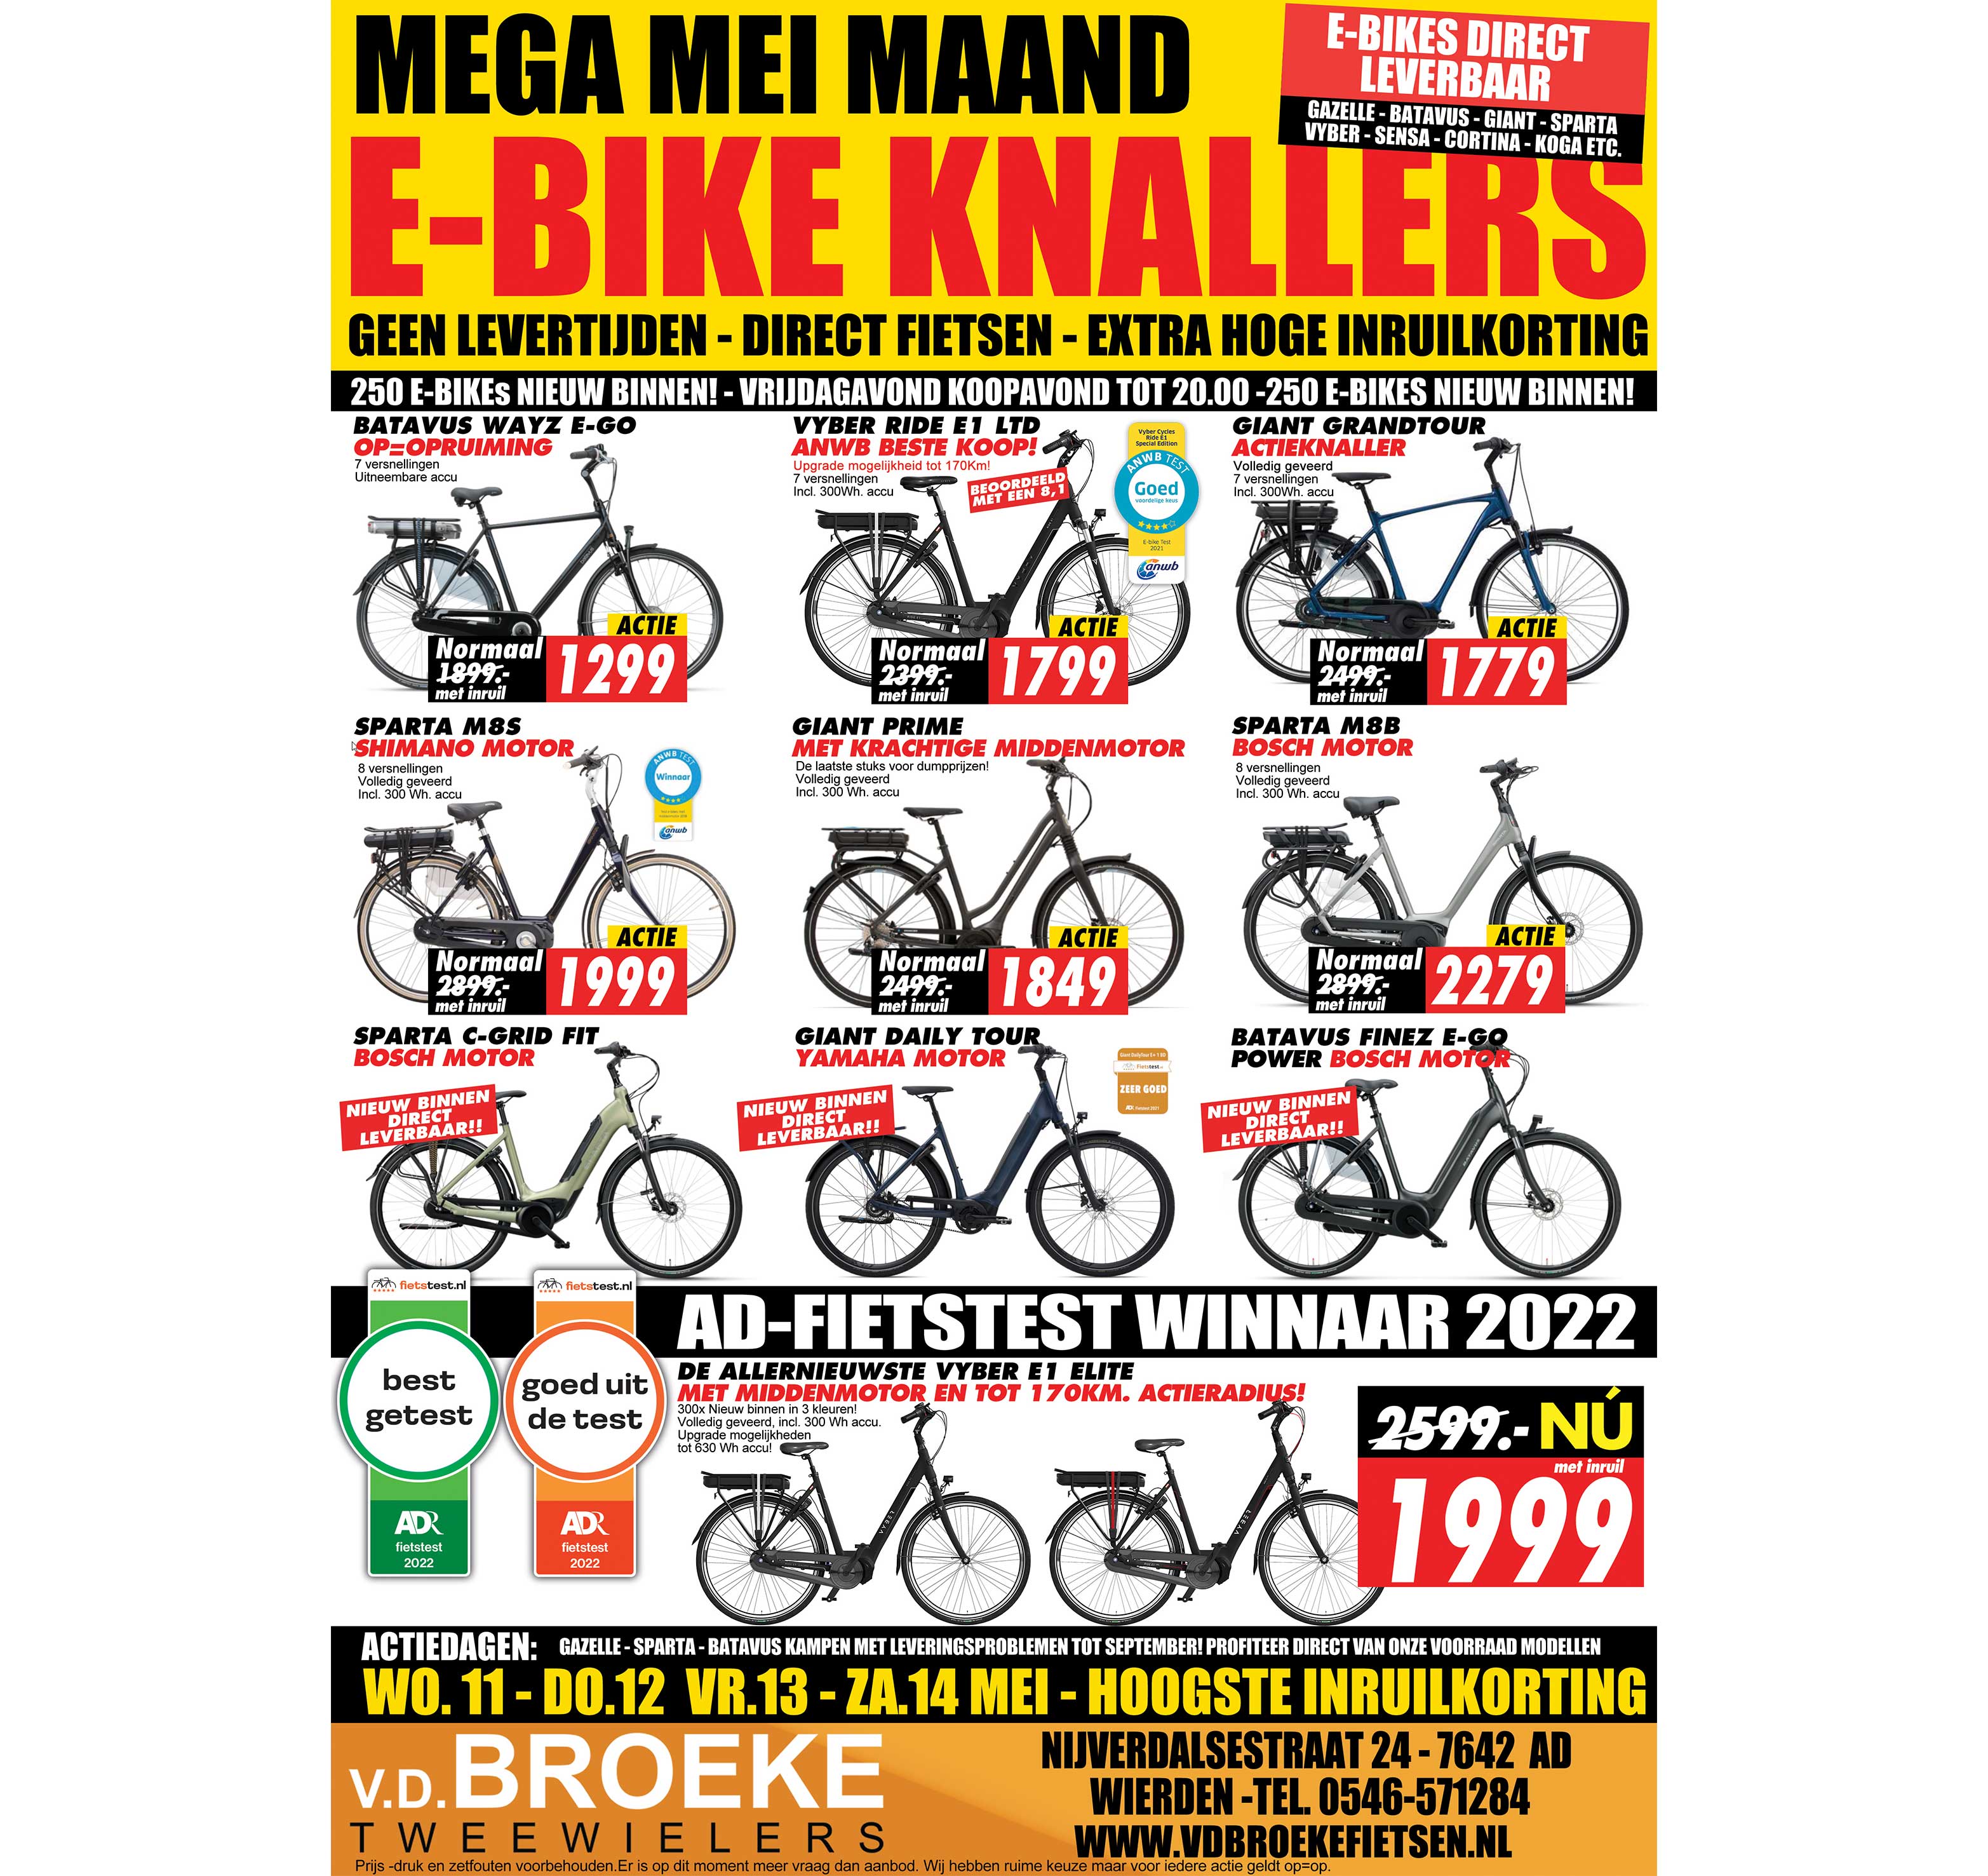 MEGA MEI MAAND!| E-bike knallers